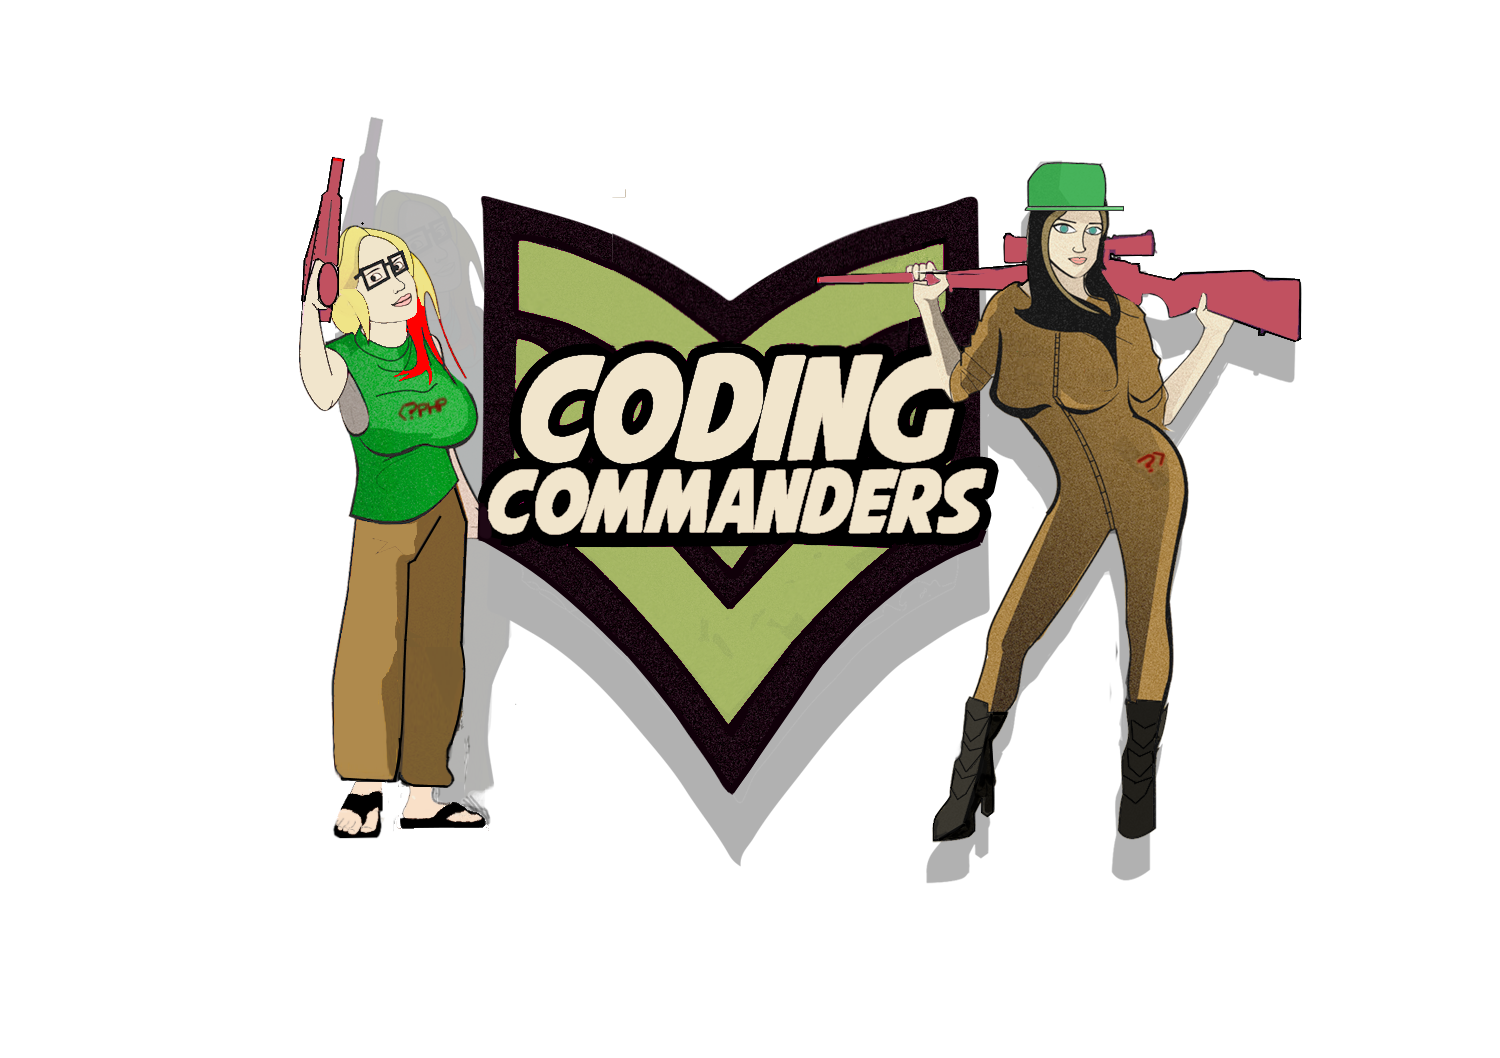 Coding Commanders logo